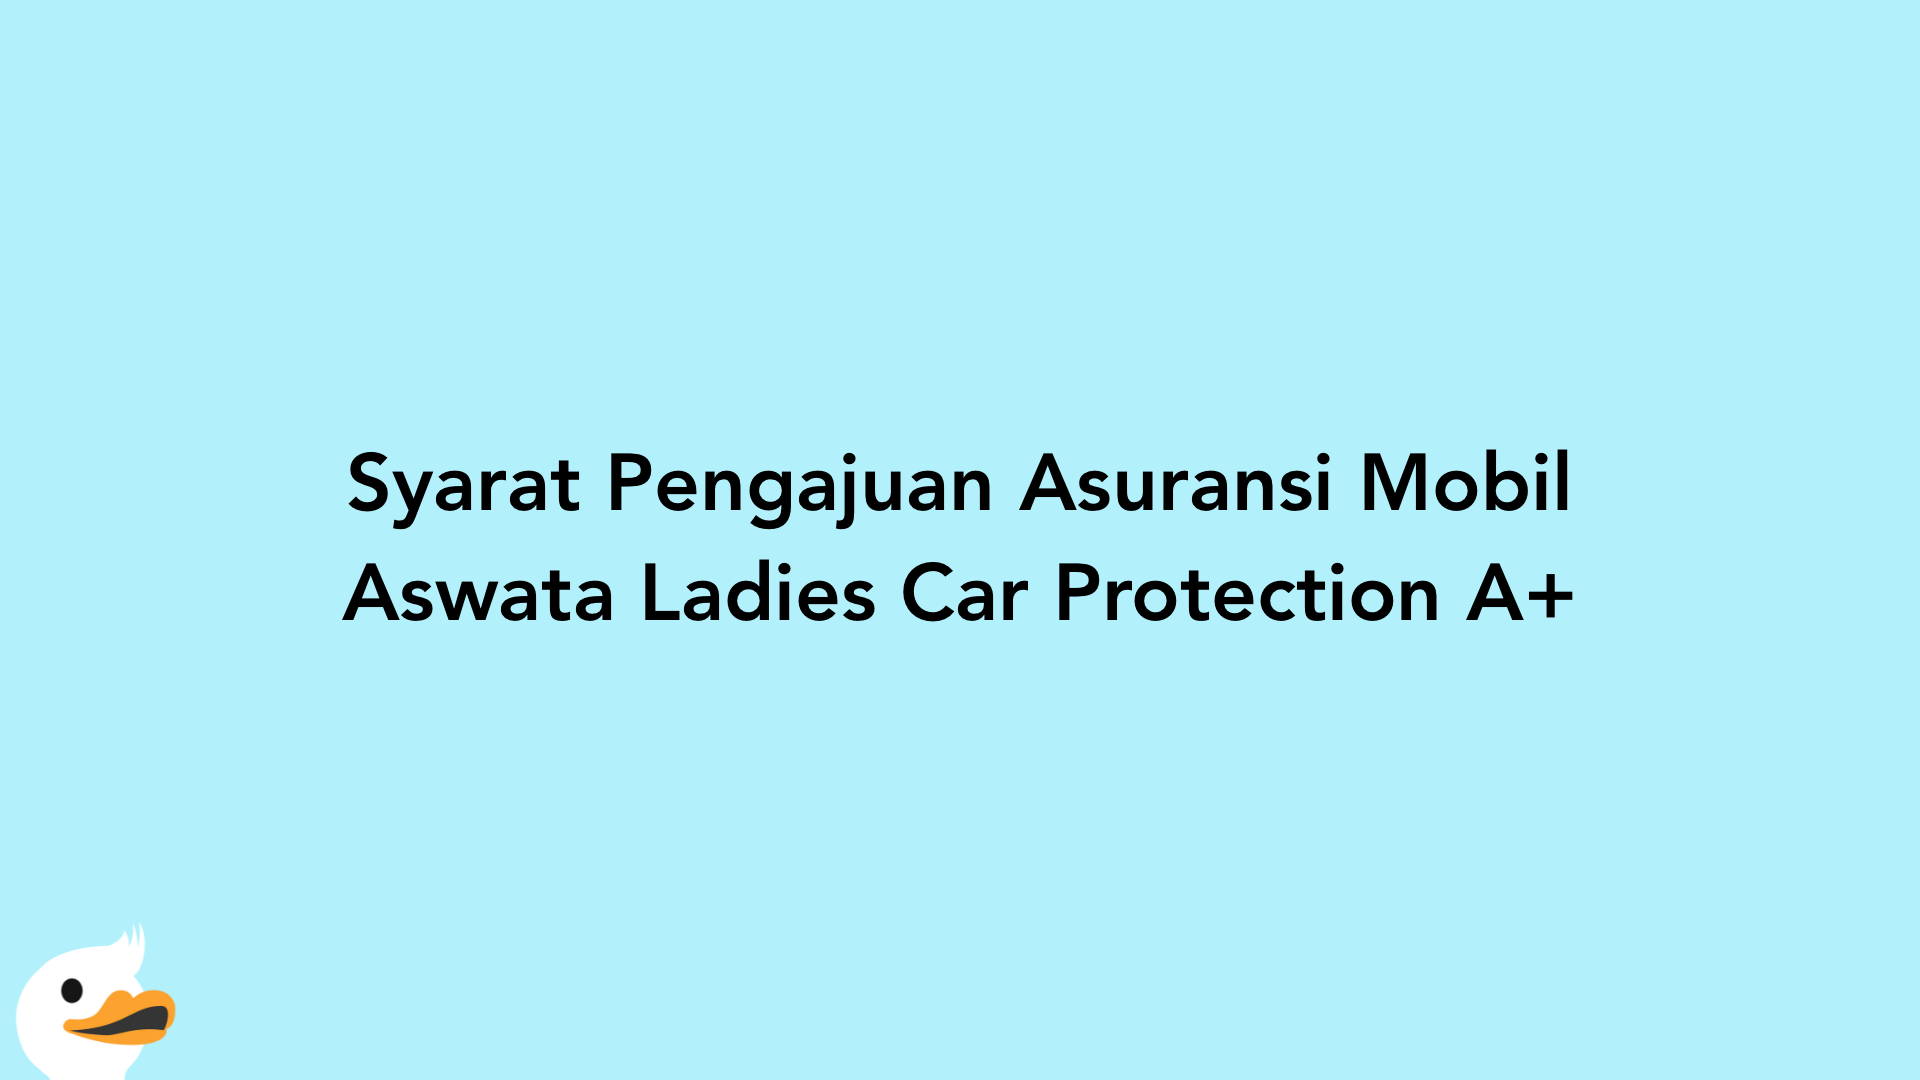 Syarat Pengajuan Asuransi Mobil Aswata Ladies Car Protection A+